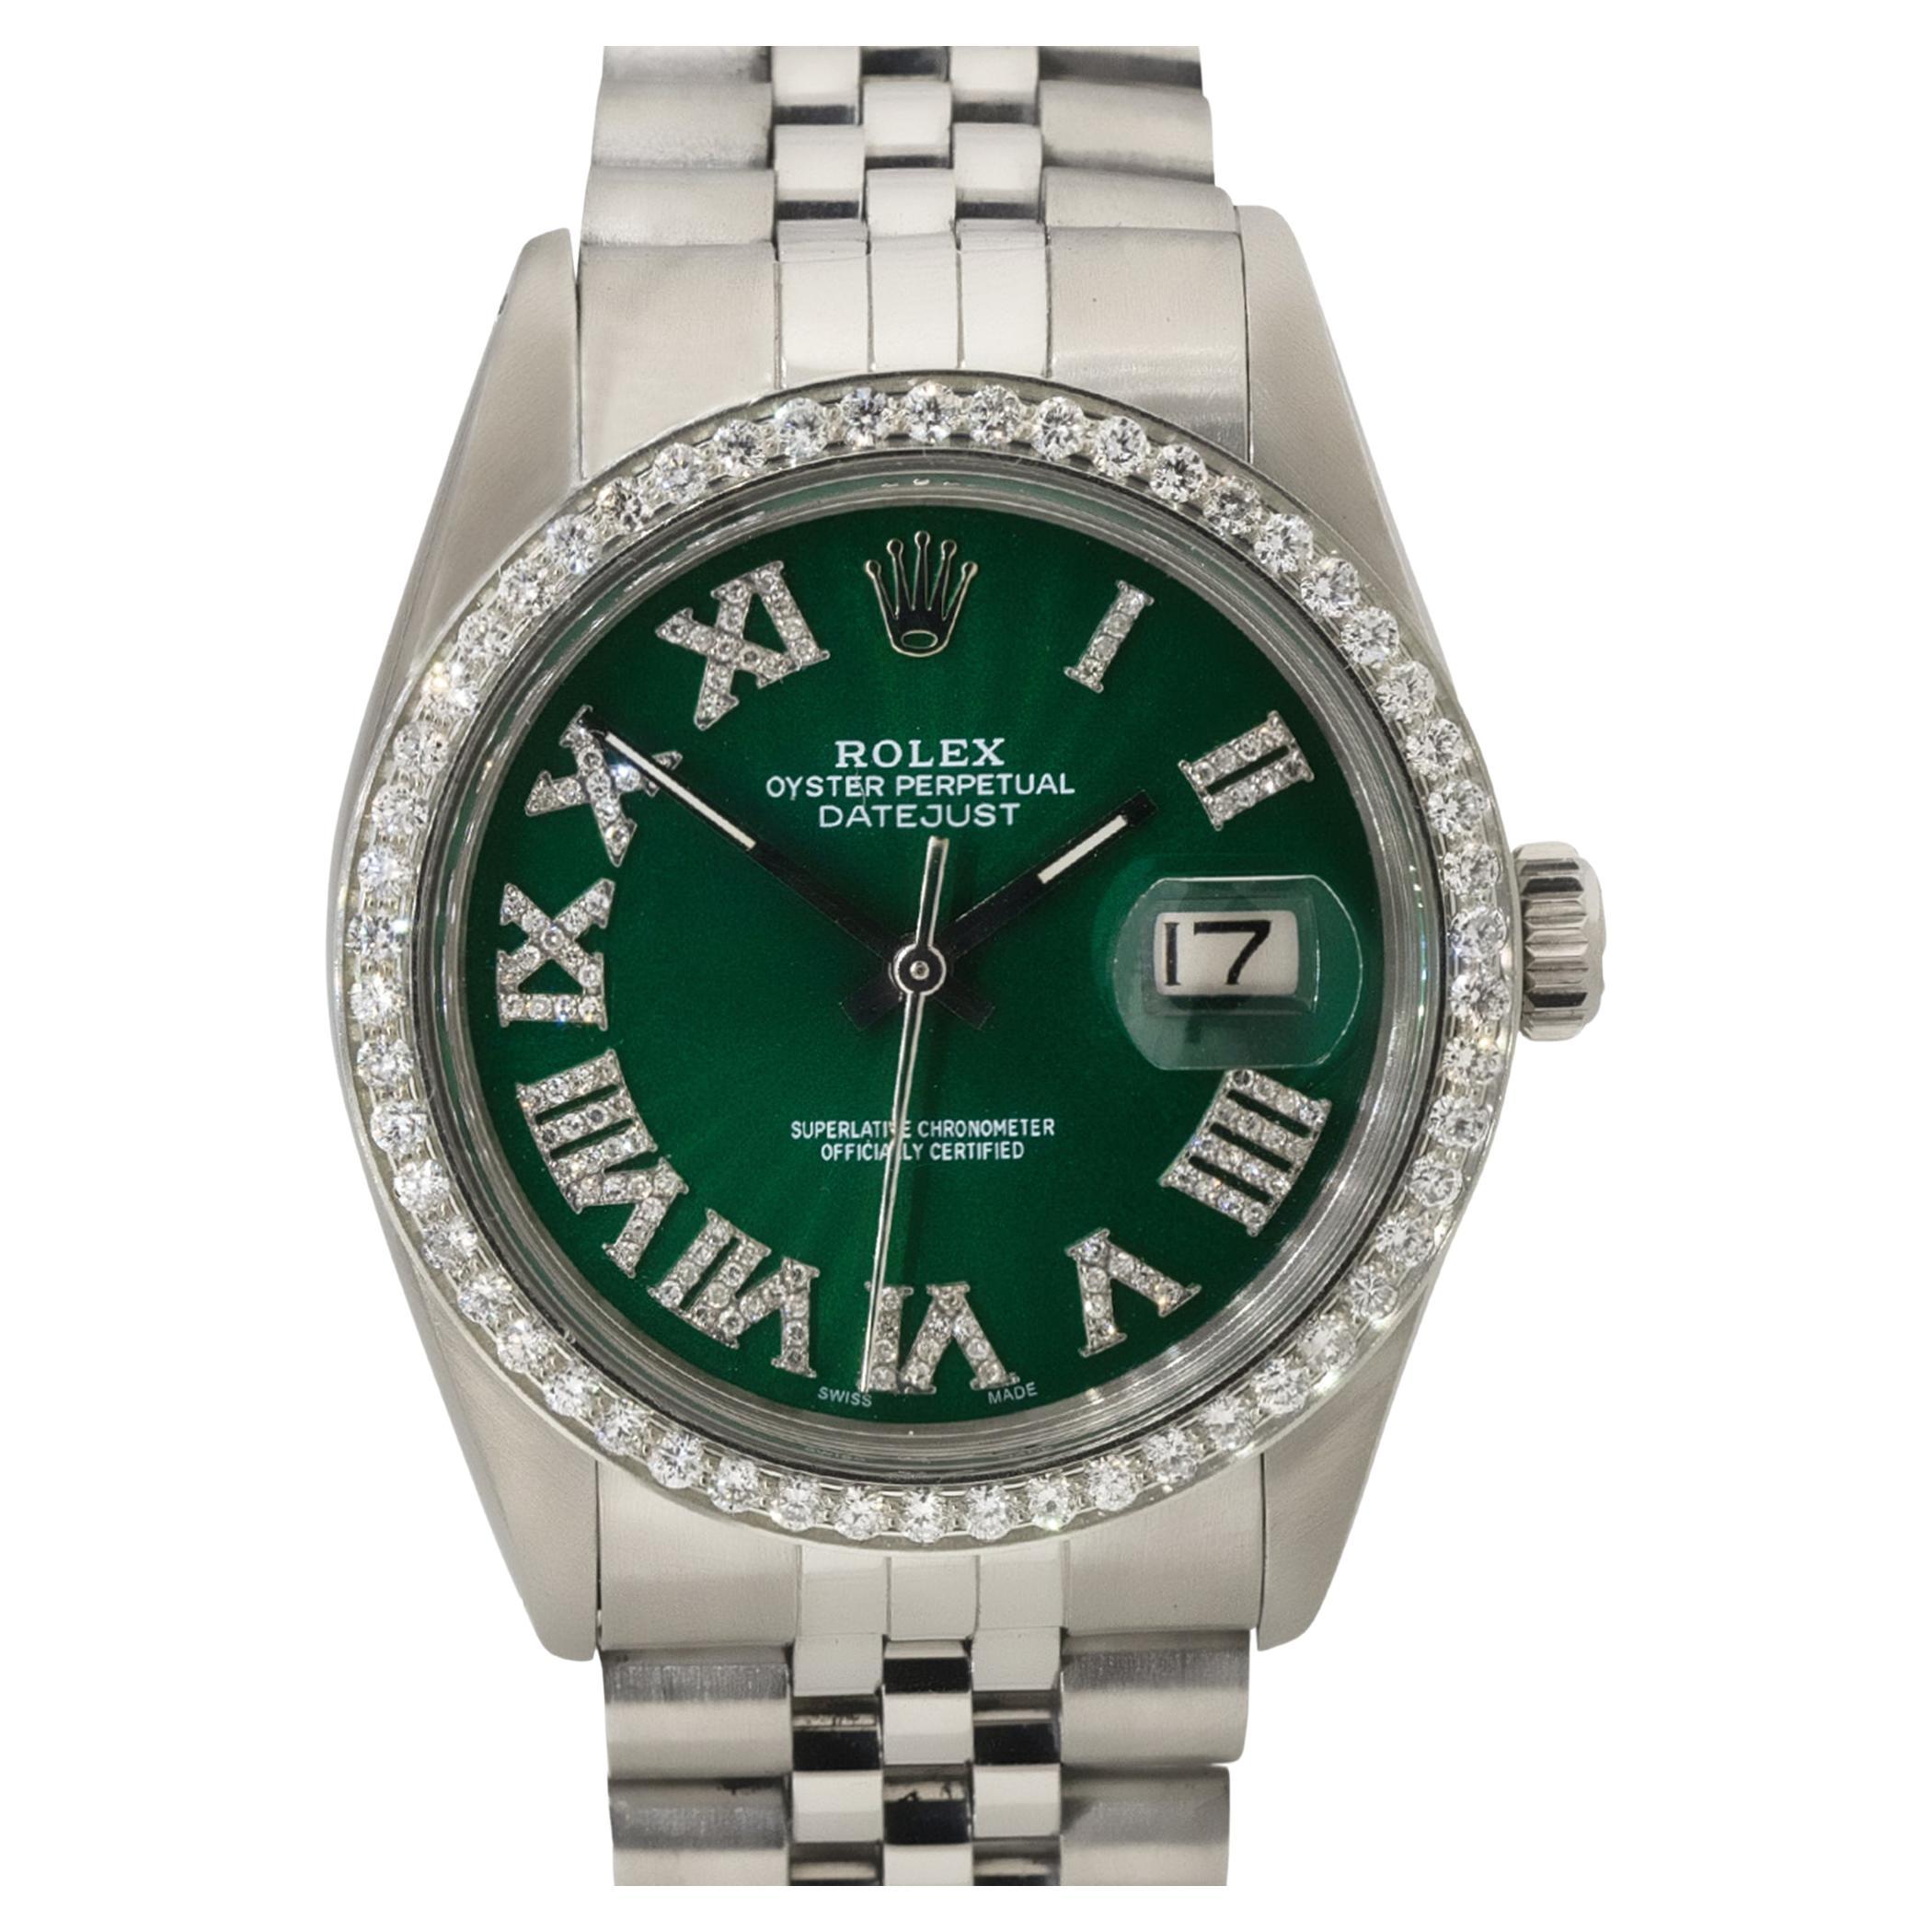 Rolex 16014 Datejust 36mm Stainless Steel Green Diamond Dial Watch